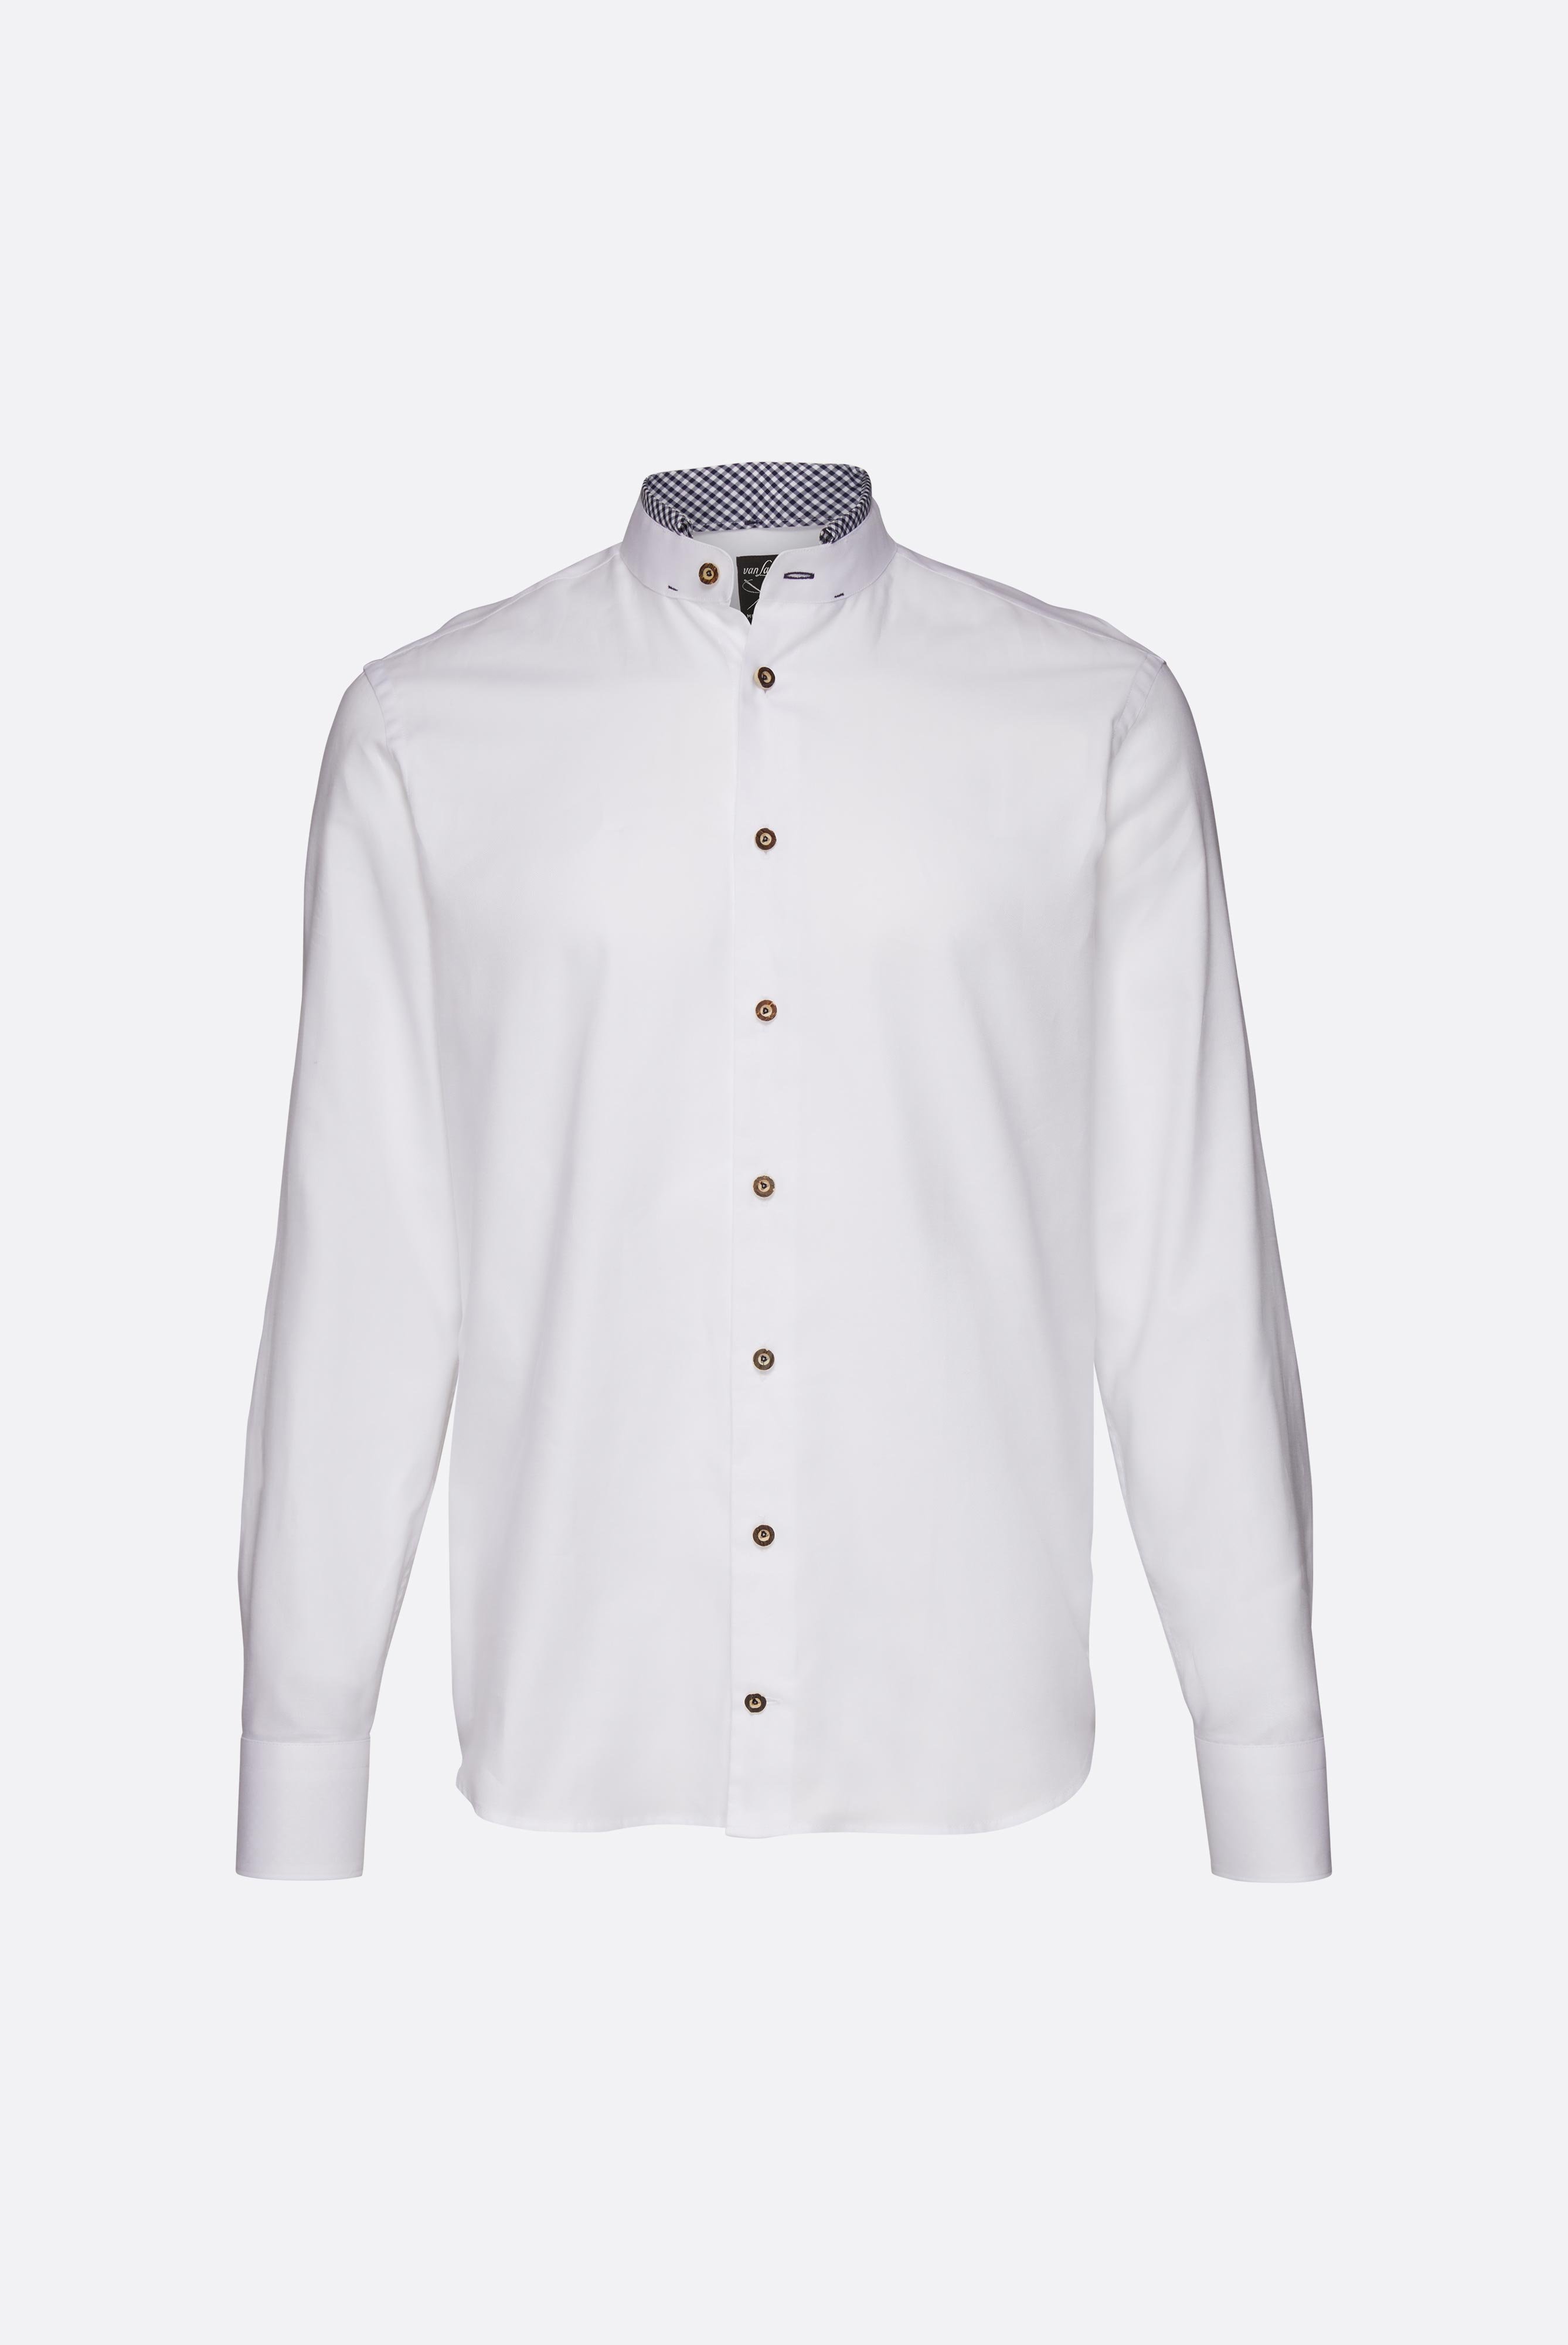 Festliche Hemden+Oxford Traditional Shirt with coloured detail+20.2081.8Q.150251.007.39